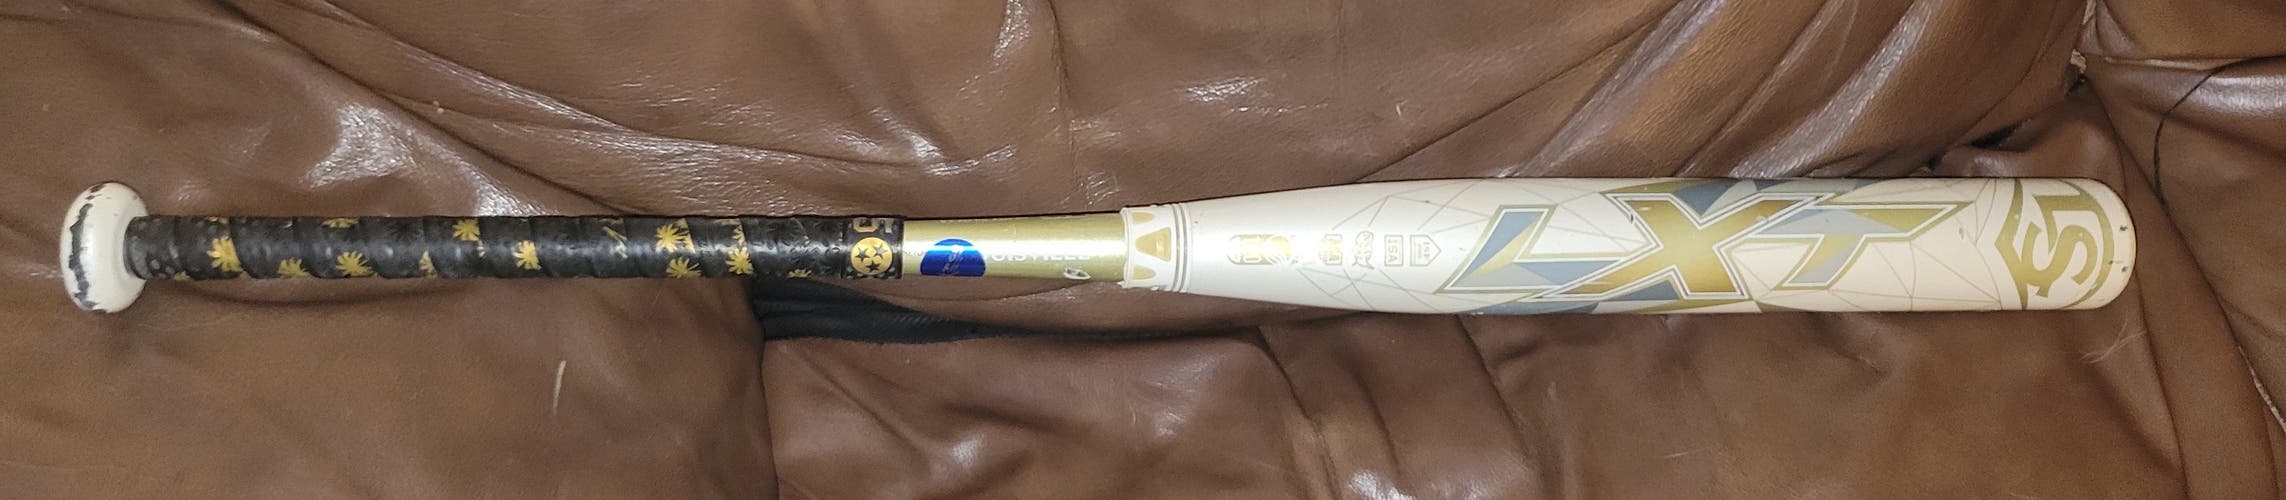 2019 Louisville Slugger LXT Fastpitch Softball Bat 32/22 (-10) WTLFPLX19A10 Composite